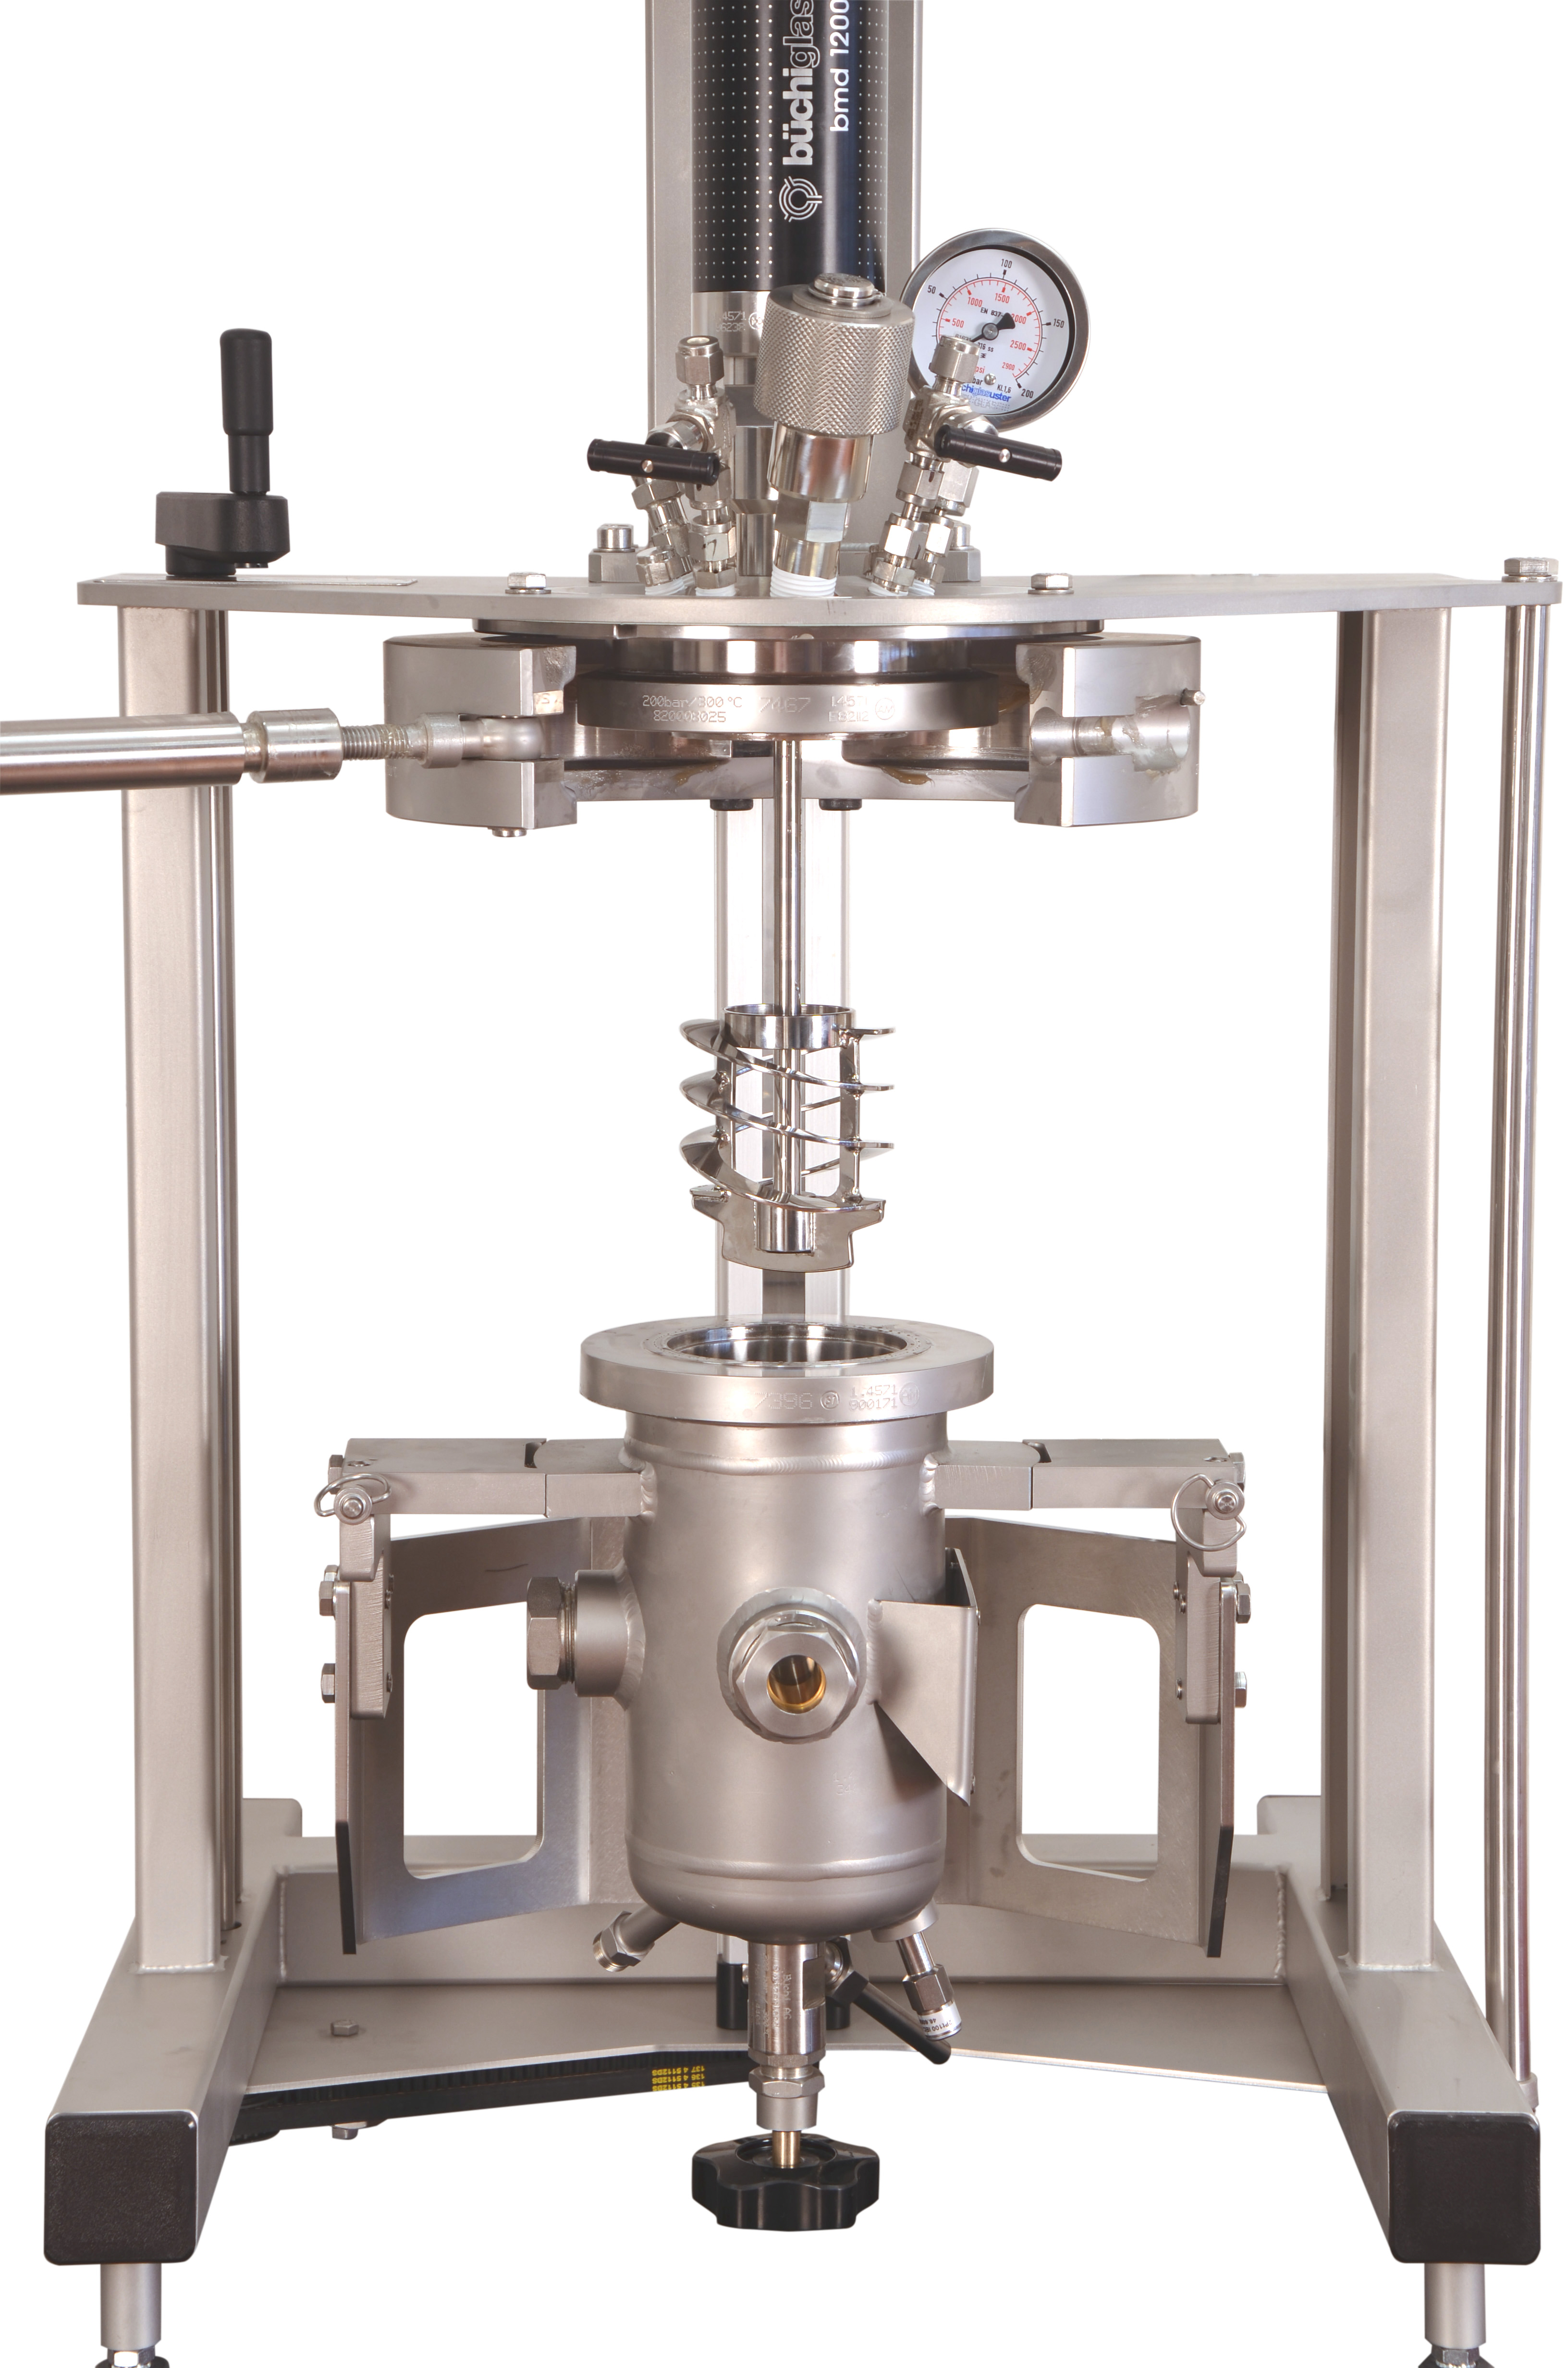 1 liter, 250 bar pressure reactor sightglass, high viscosity stirrer drive